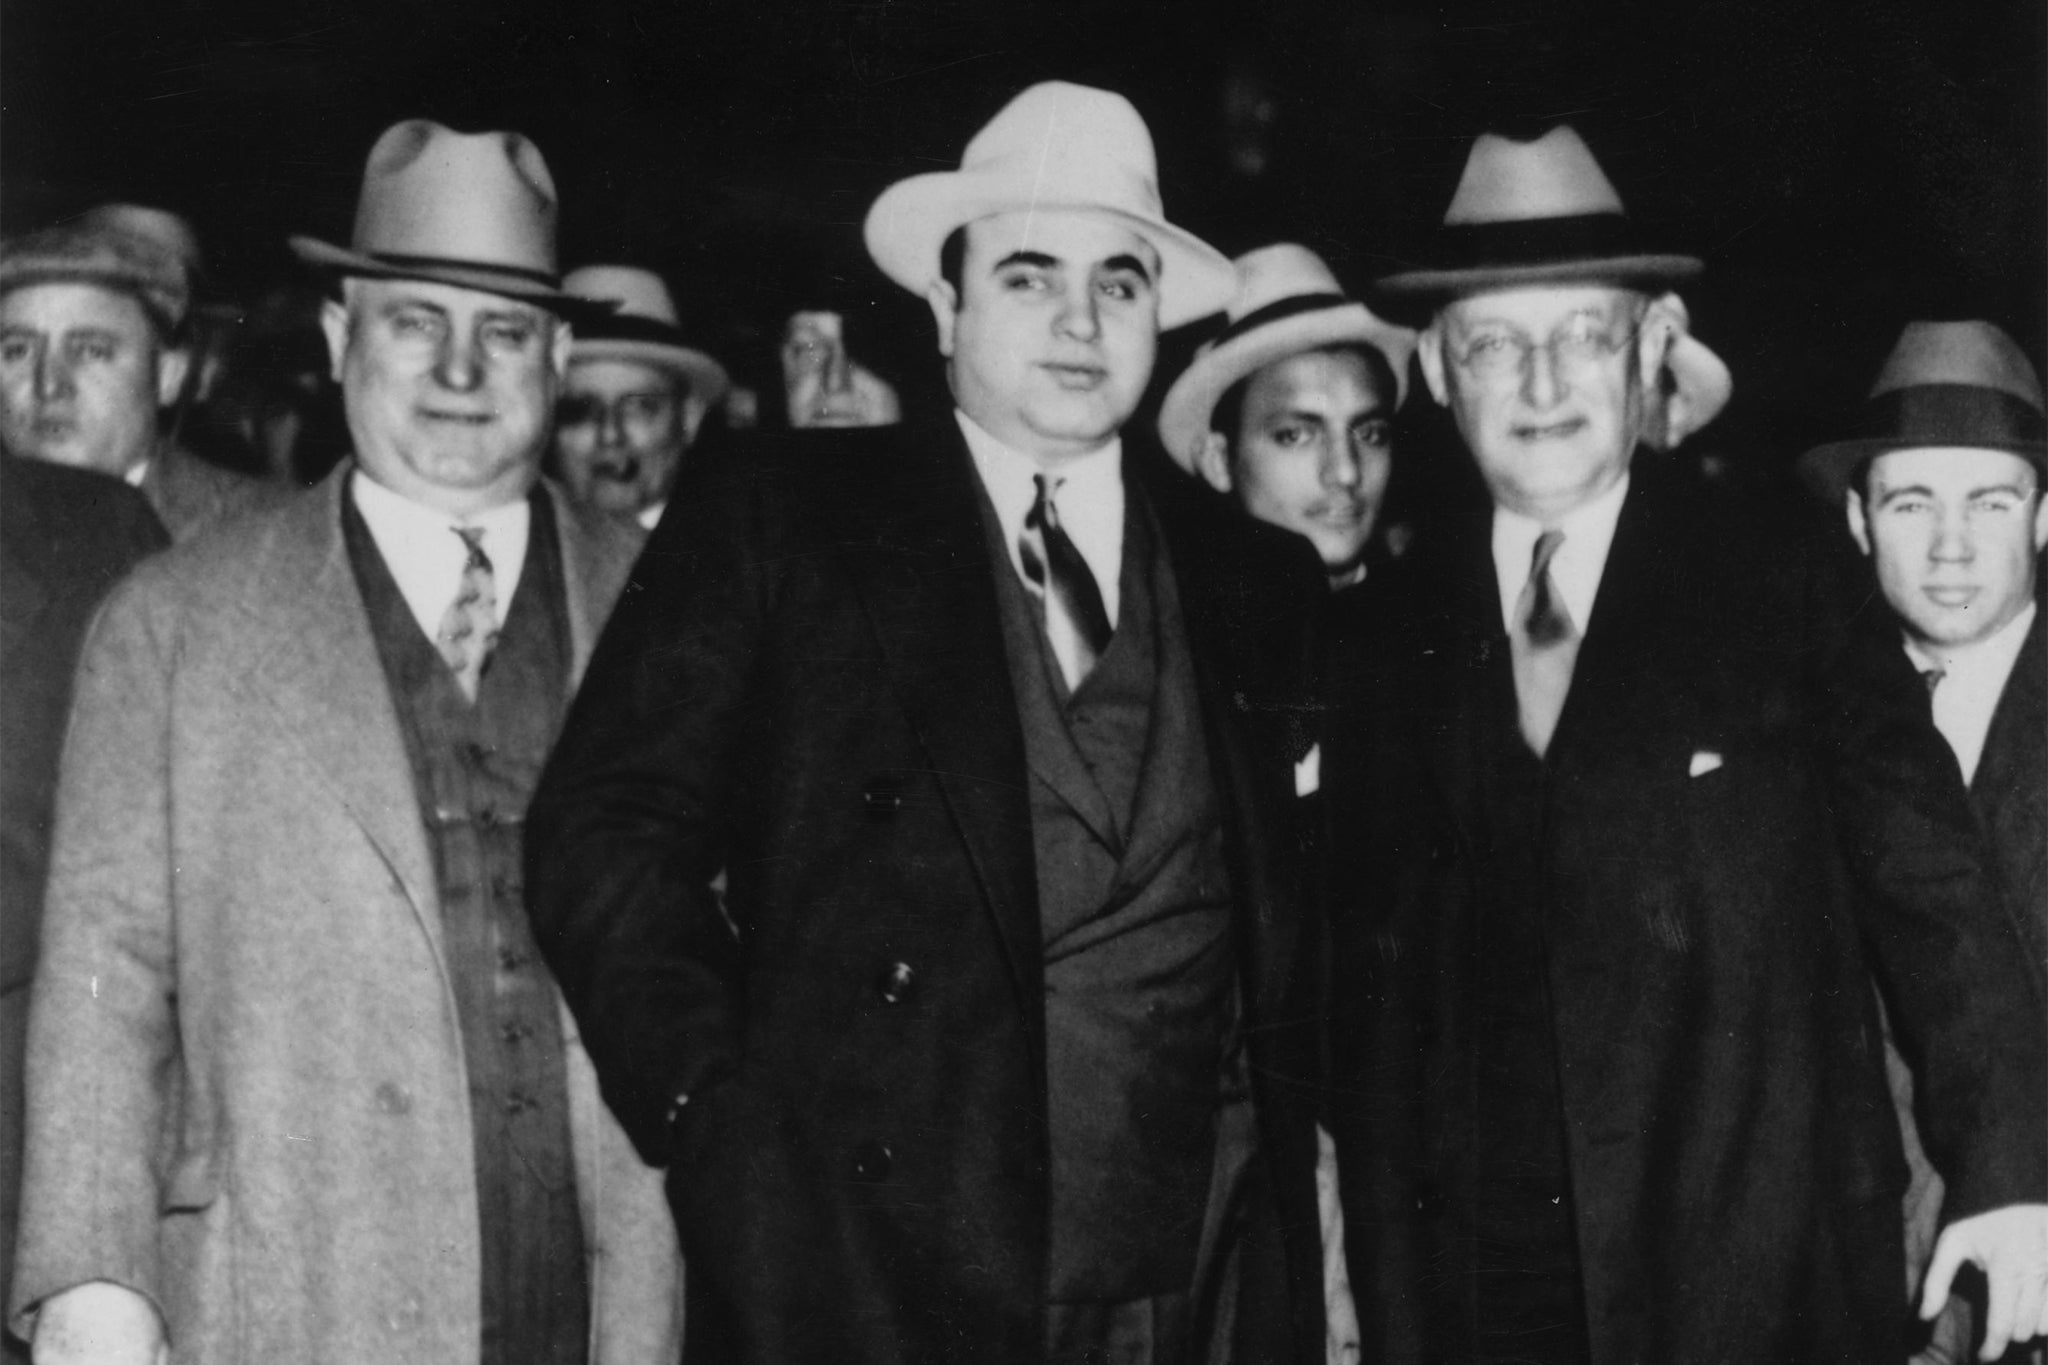 circa 1930: Italian-American gangster Al Capone with US Marshal Laubenheimer